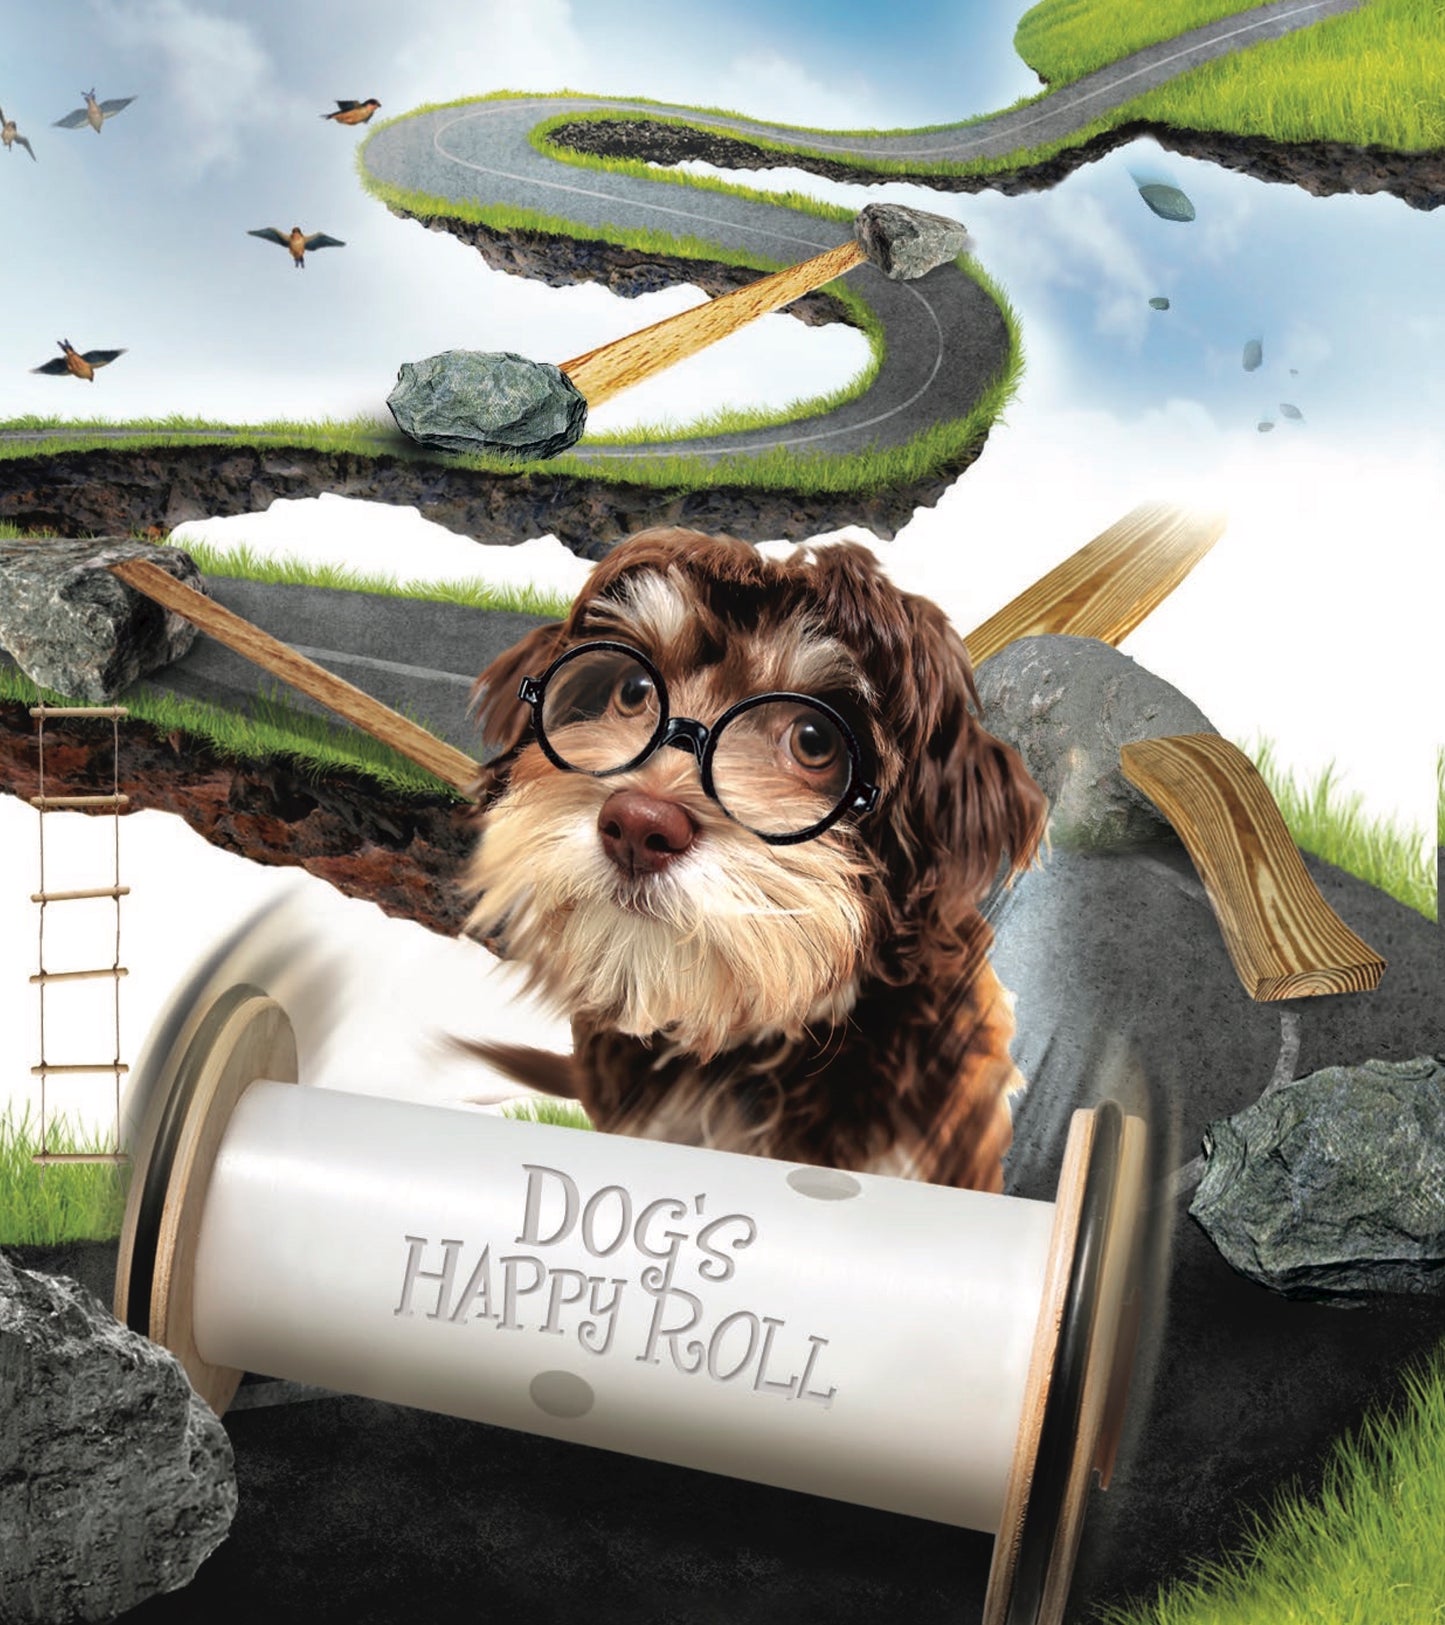 Happy Roll - My Intelligent Dogs